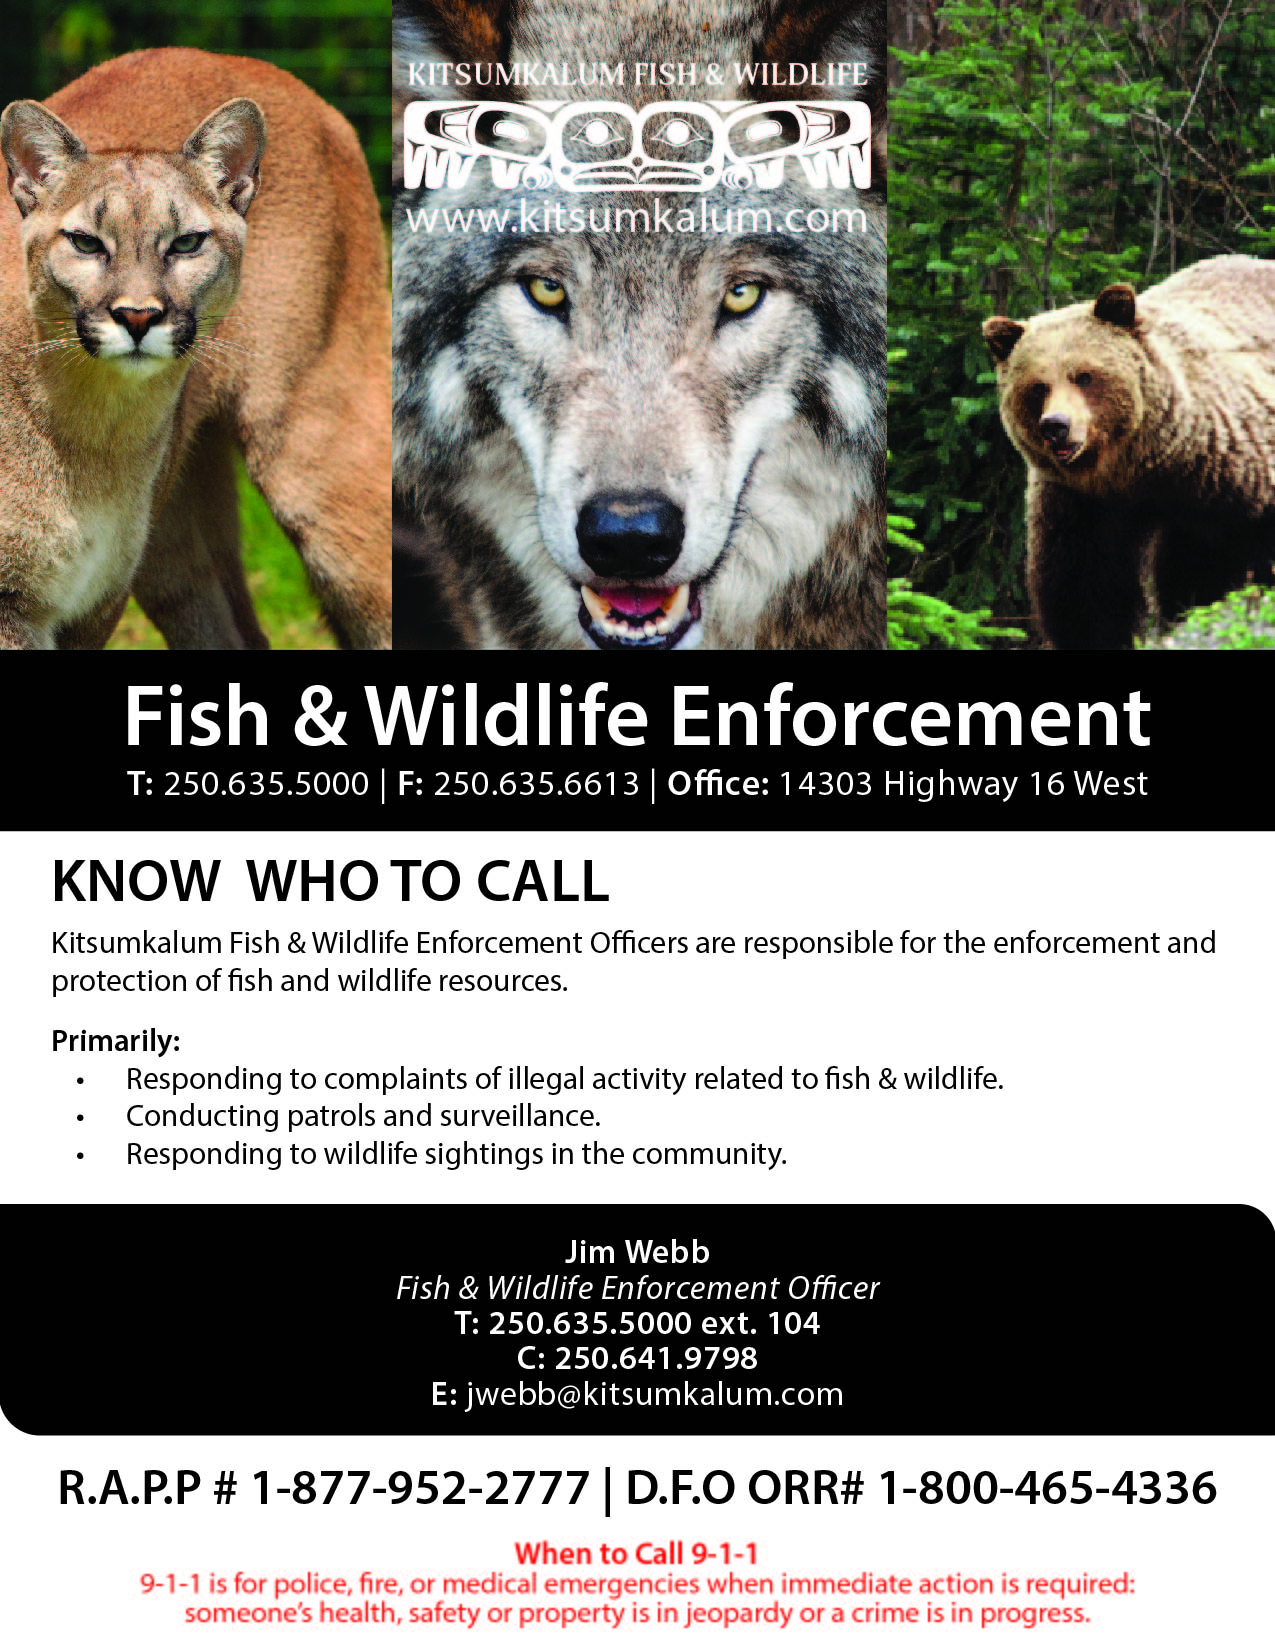 Kitsumkalum Fish & Wildlife Enforcement